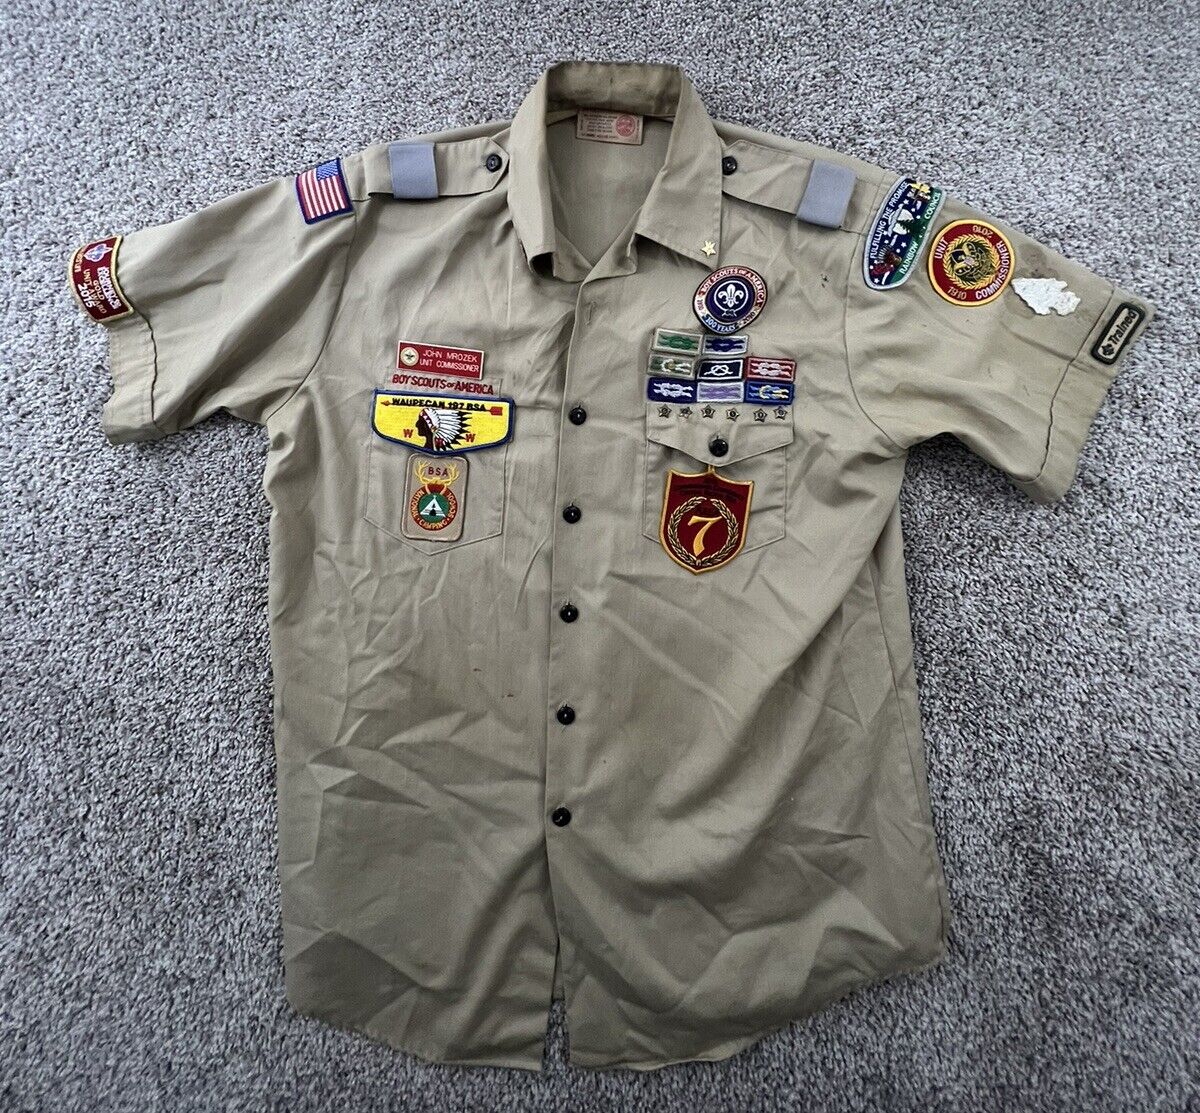 VTG 1996 BSA Men LG SS Uniform Shirt Oscar de la Renta Boy Scouts of America USA